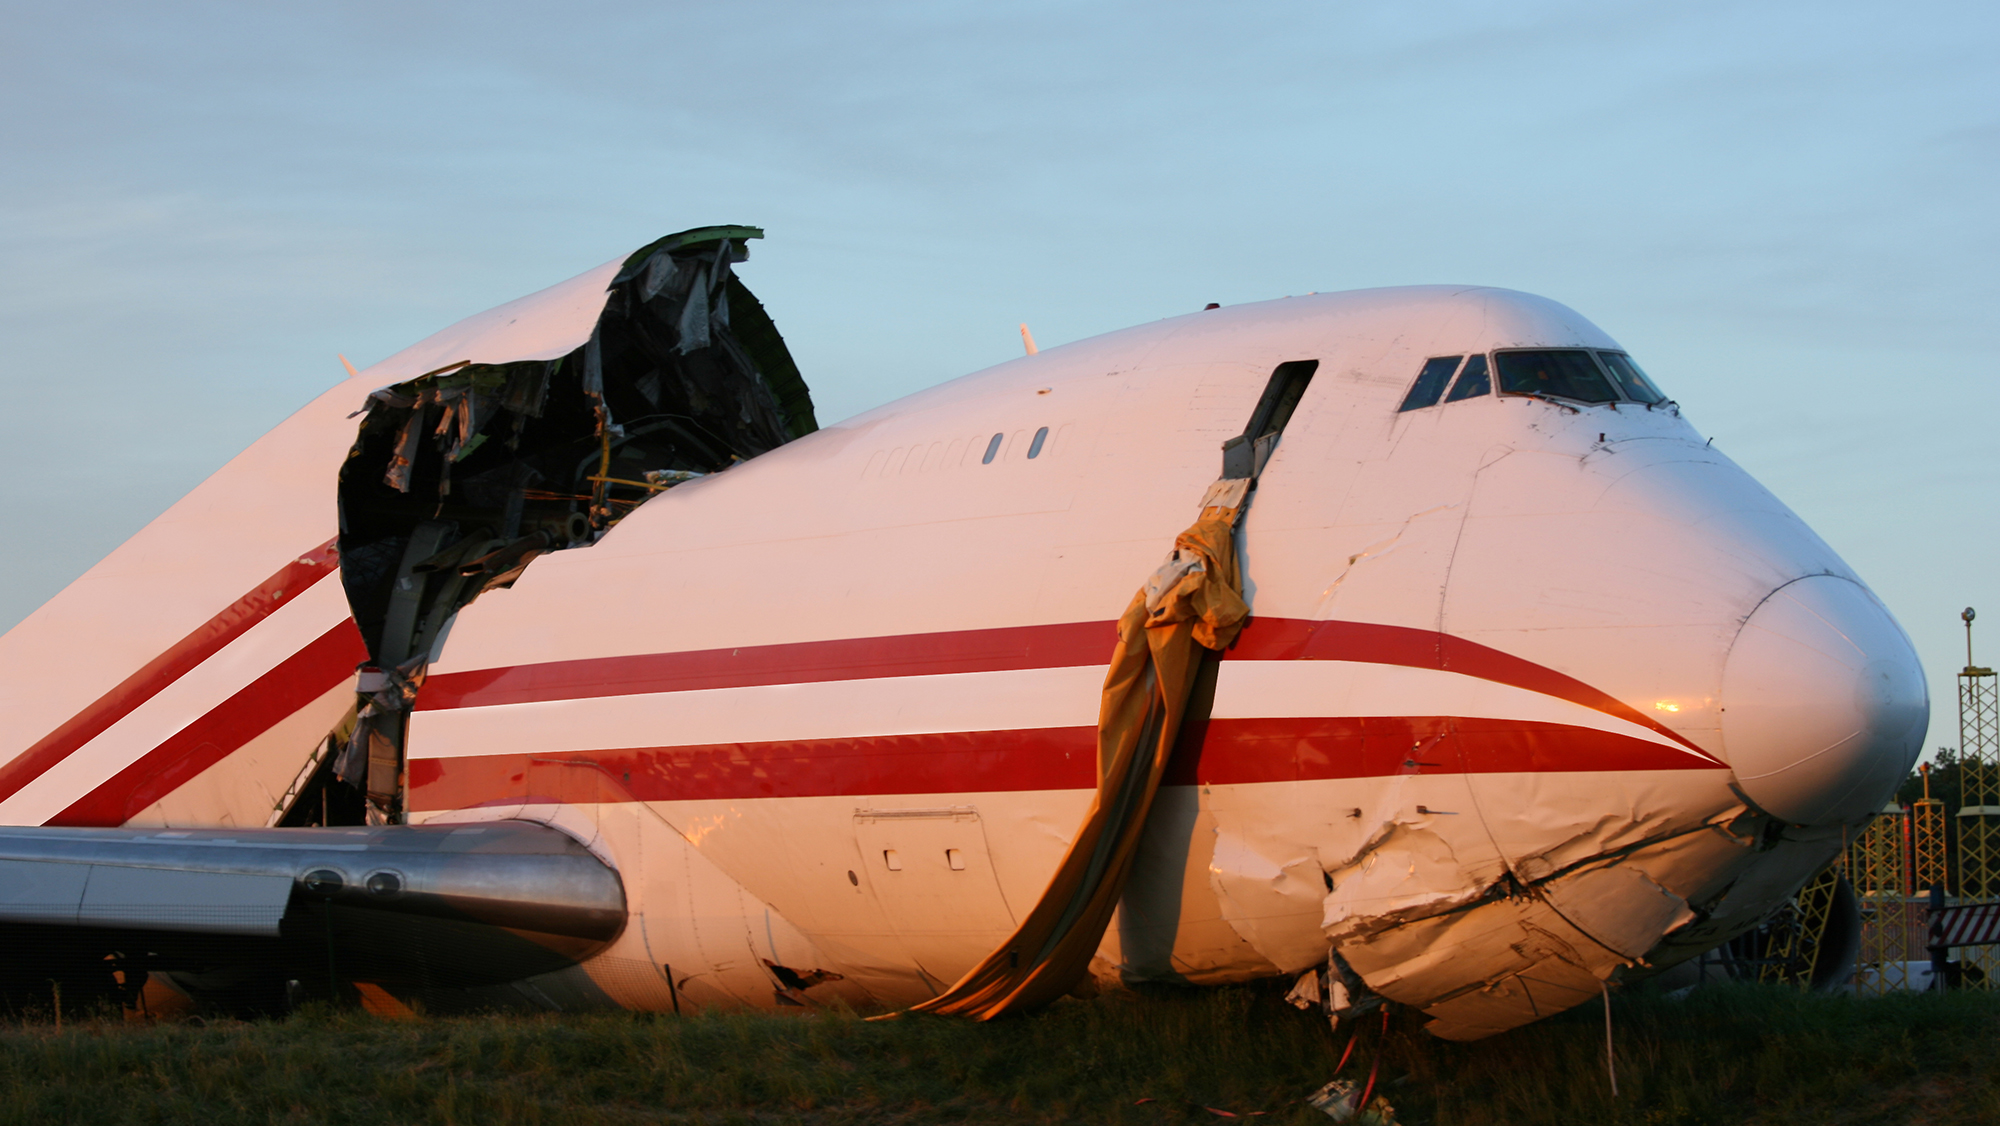 A plane crash shows failure of a material